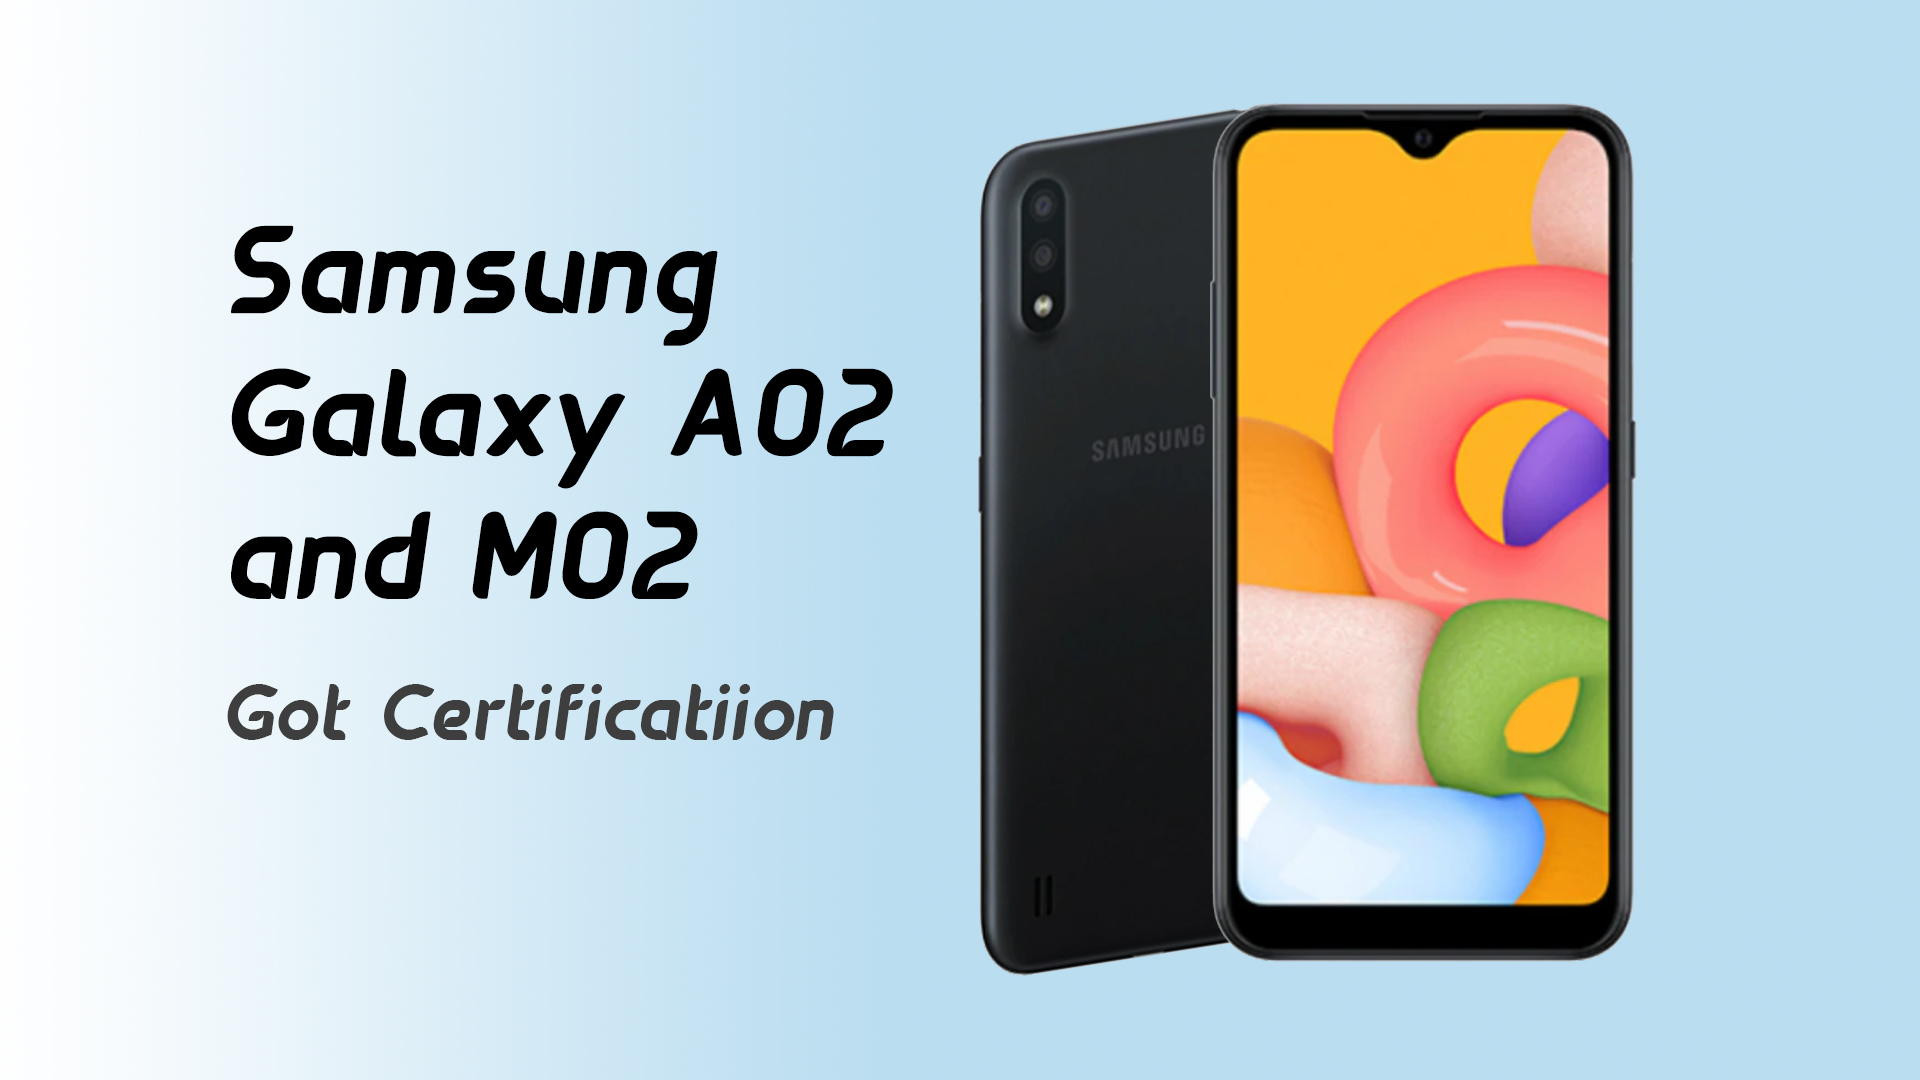 Samsung Galaxy A02 certified